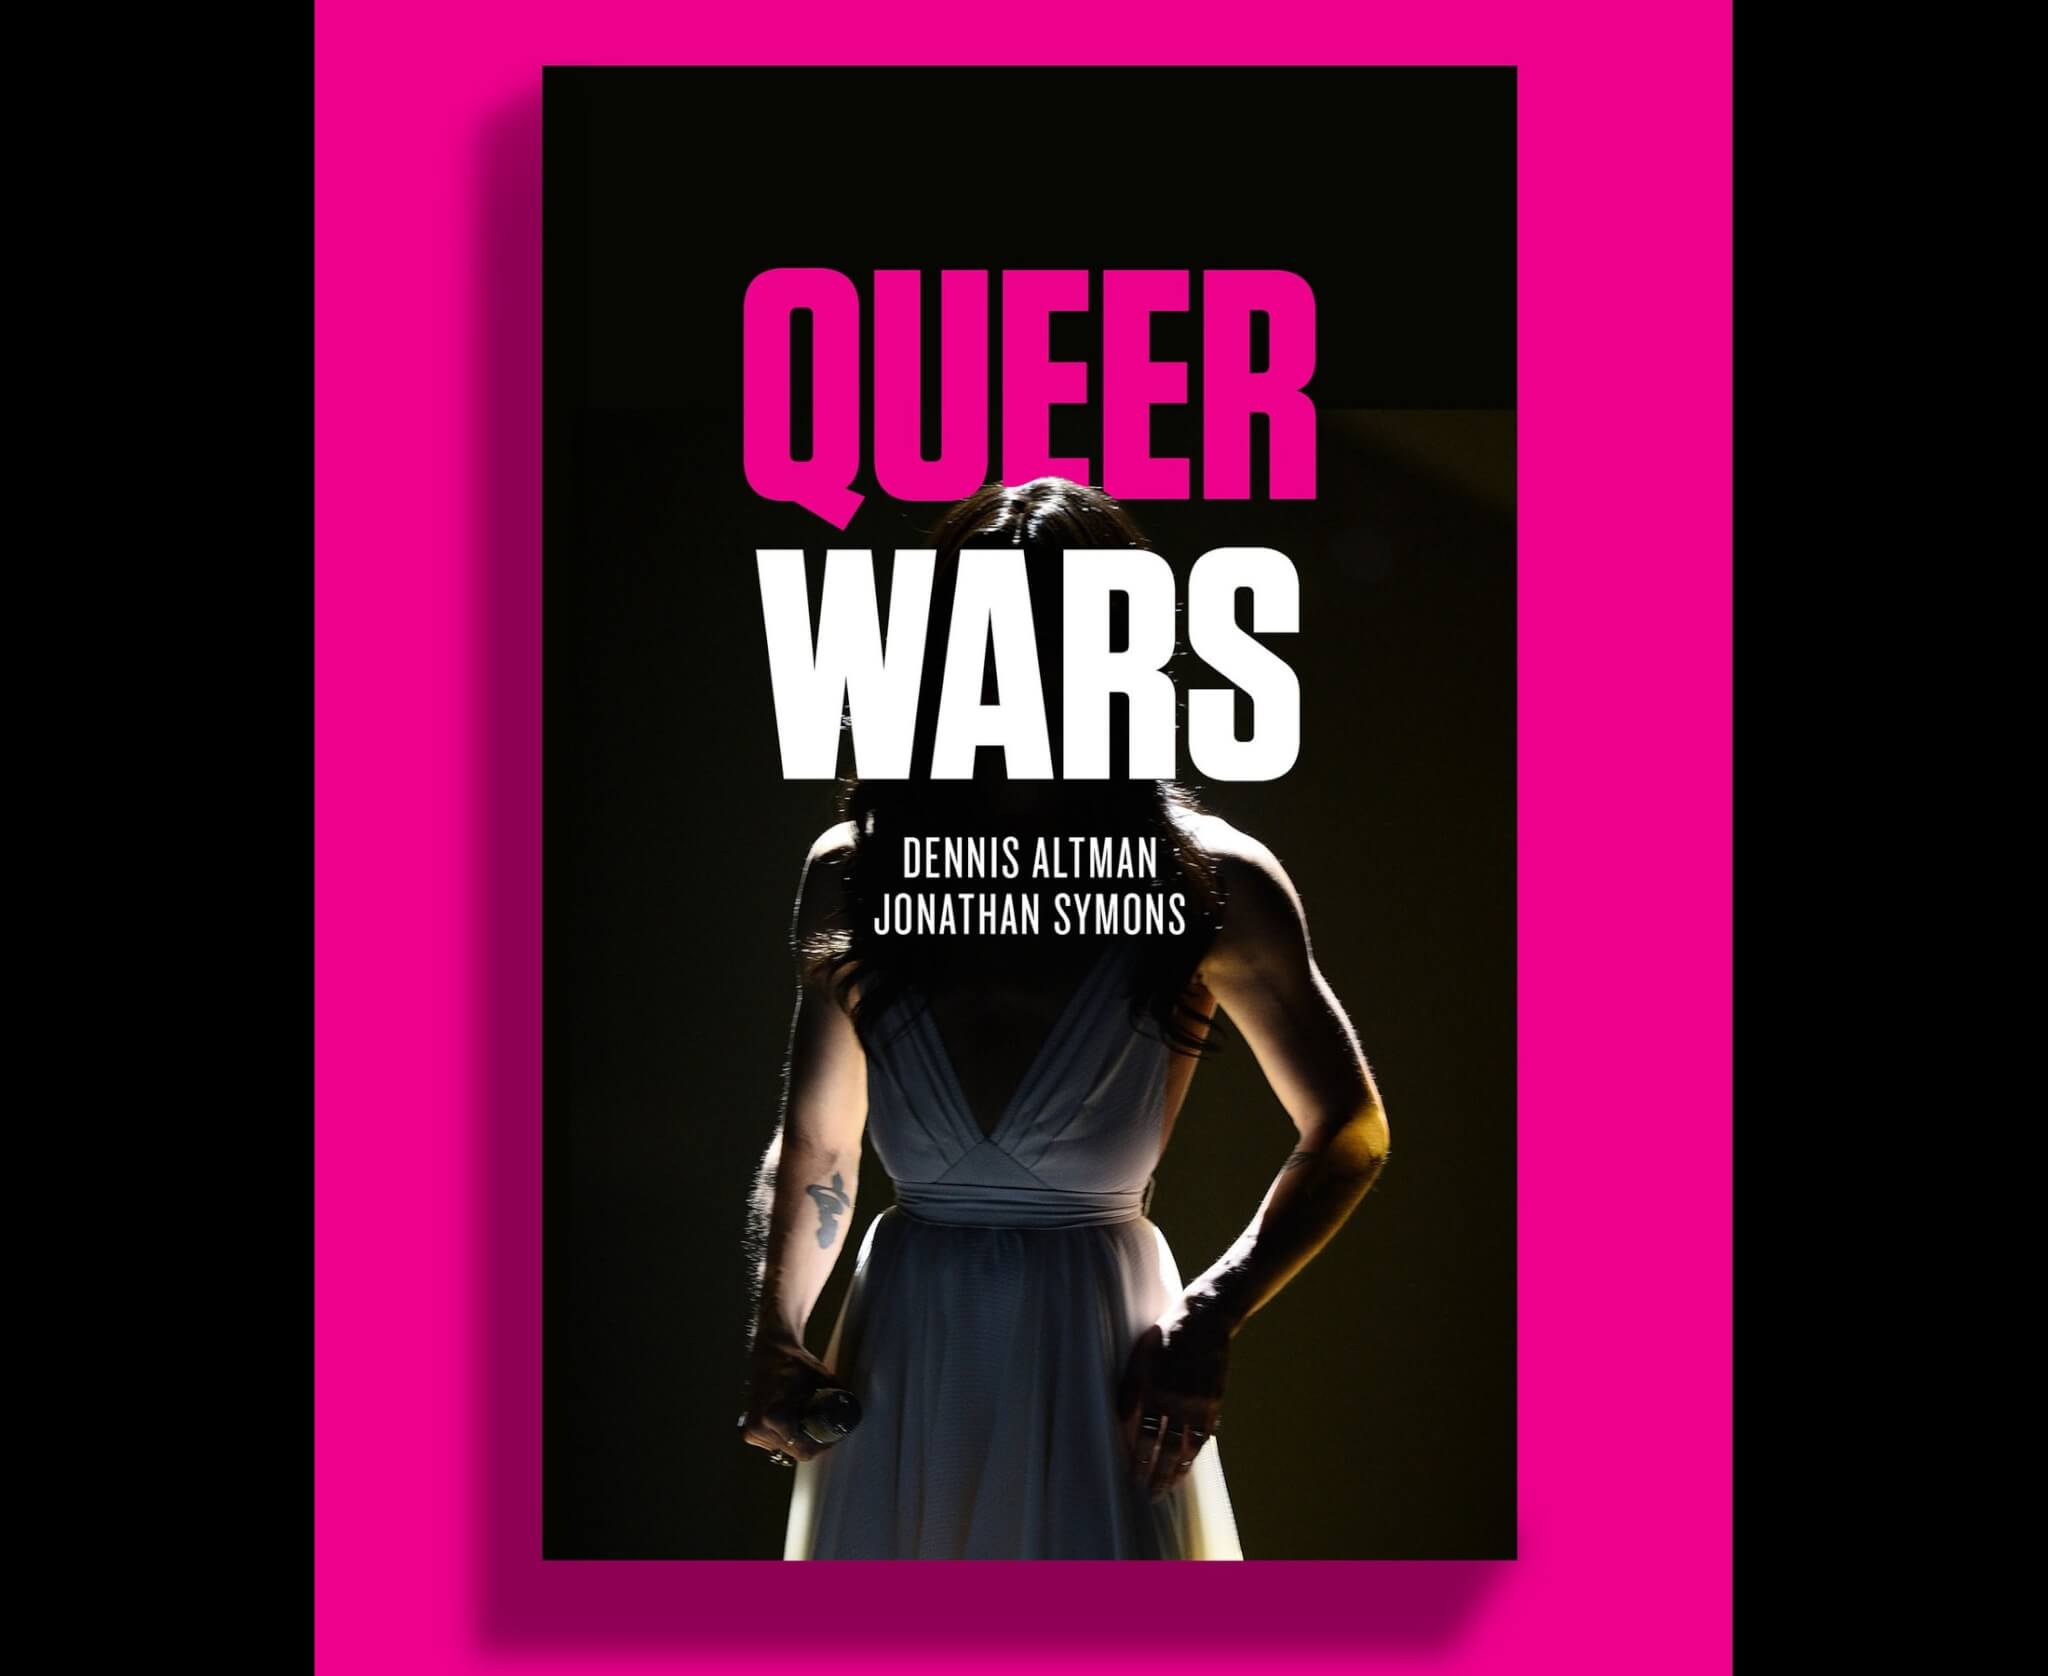 Queer wars di Dennis Altman and Jonathan Symons, pubblicato nel 2016